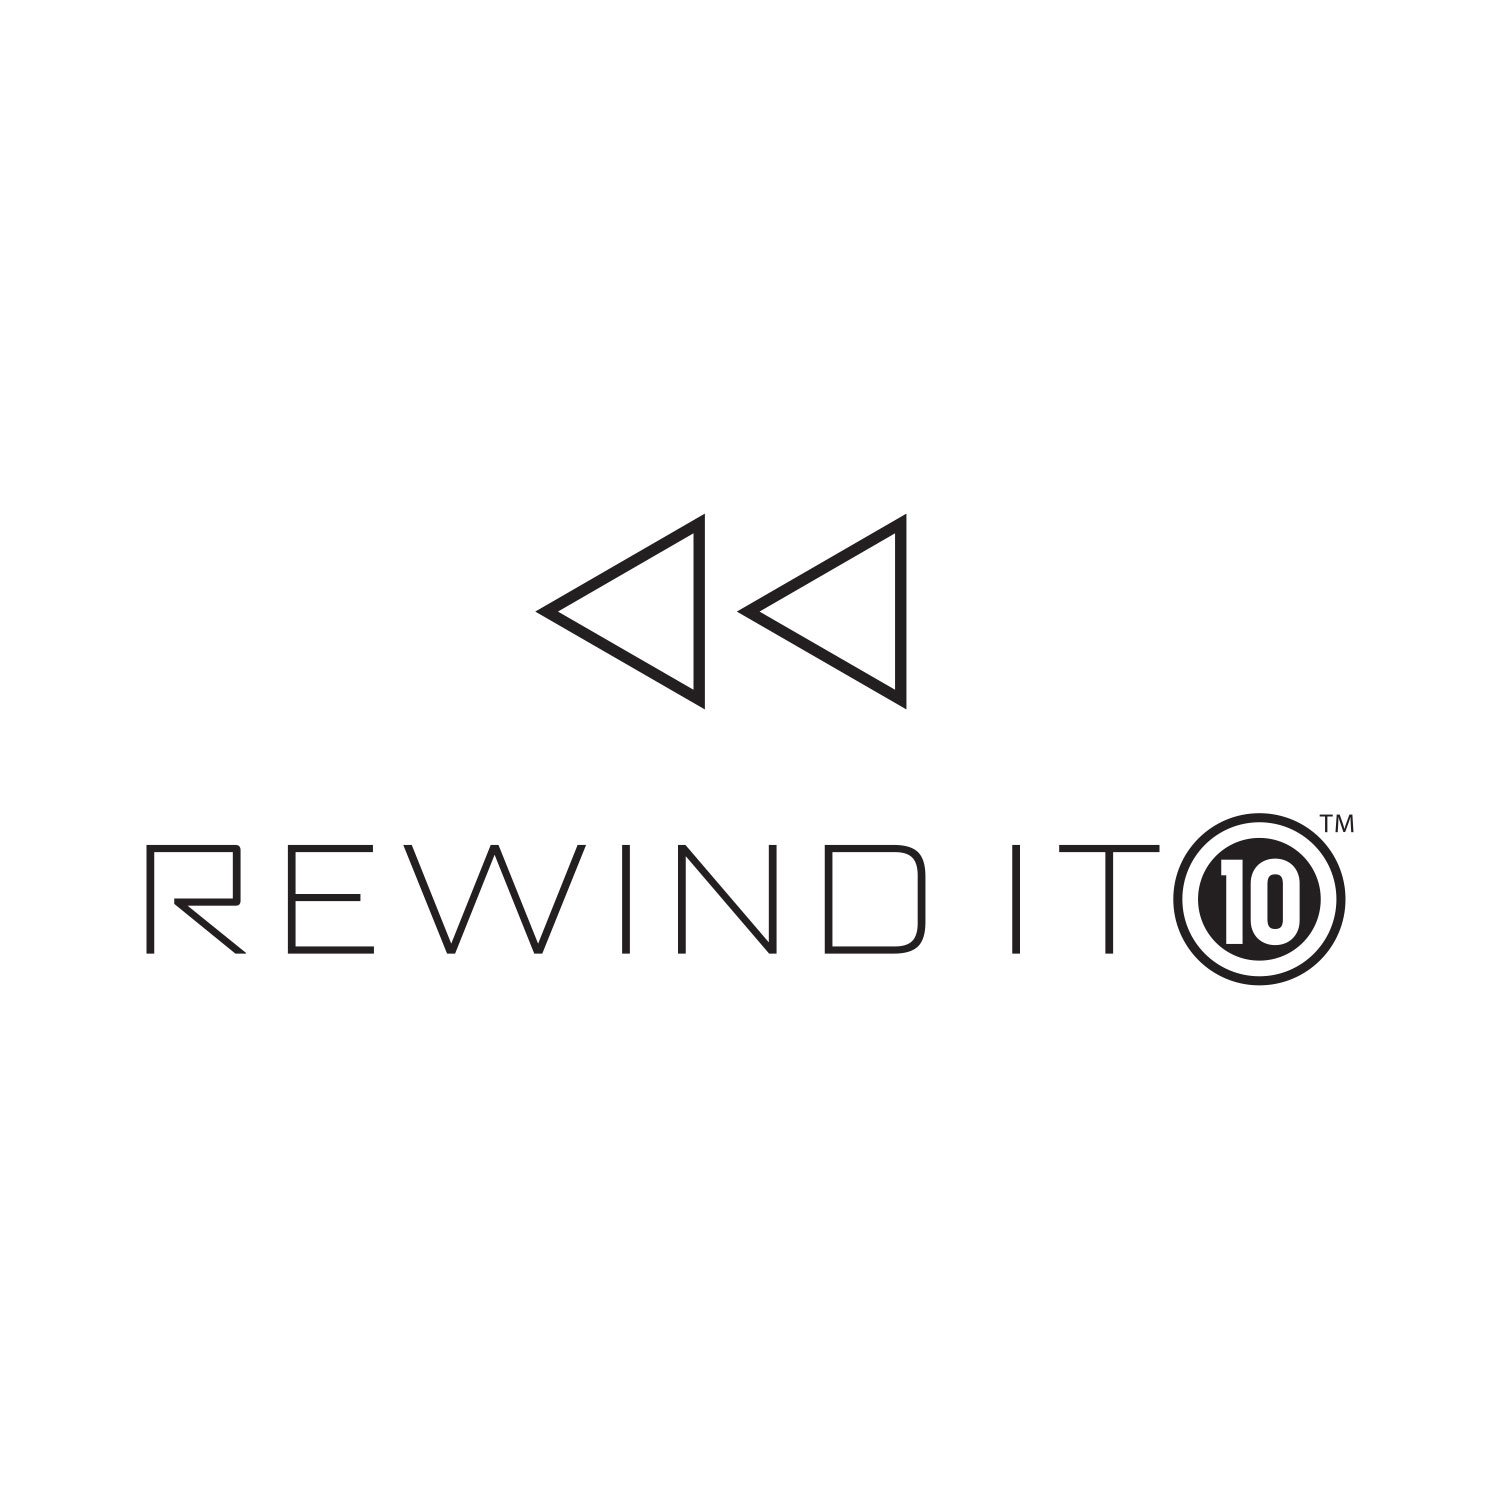 Rewind-it-10-logo-2.jpg